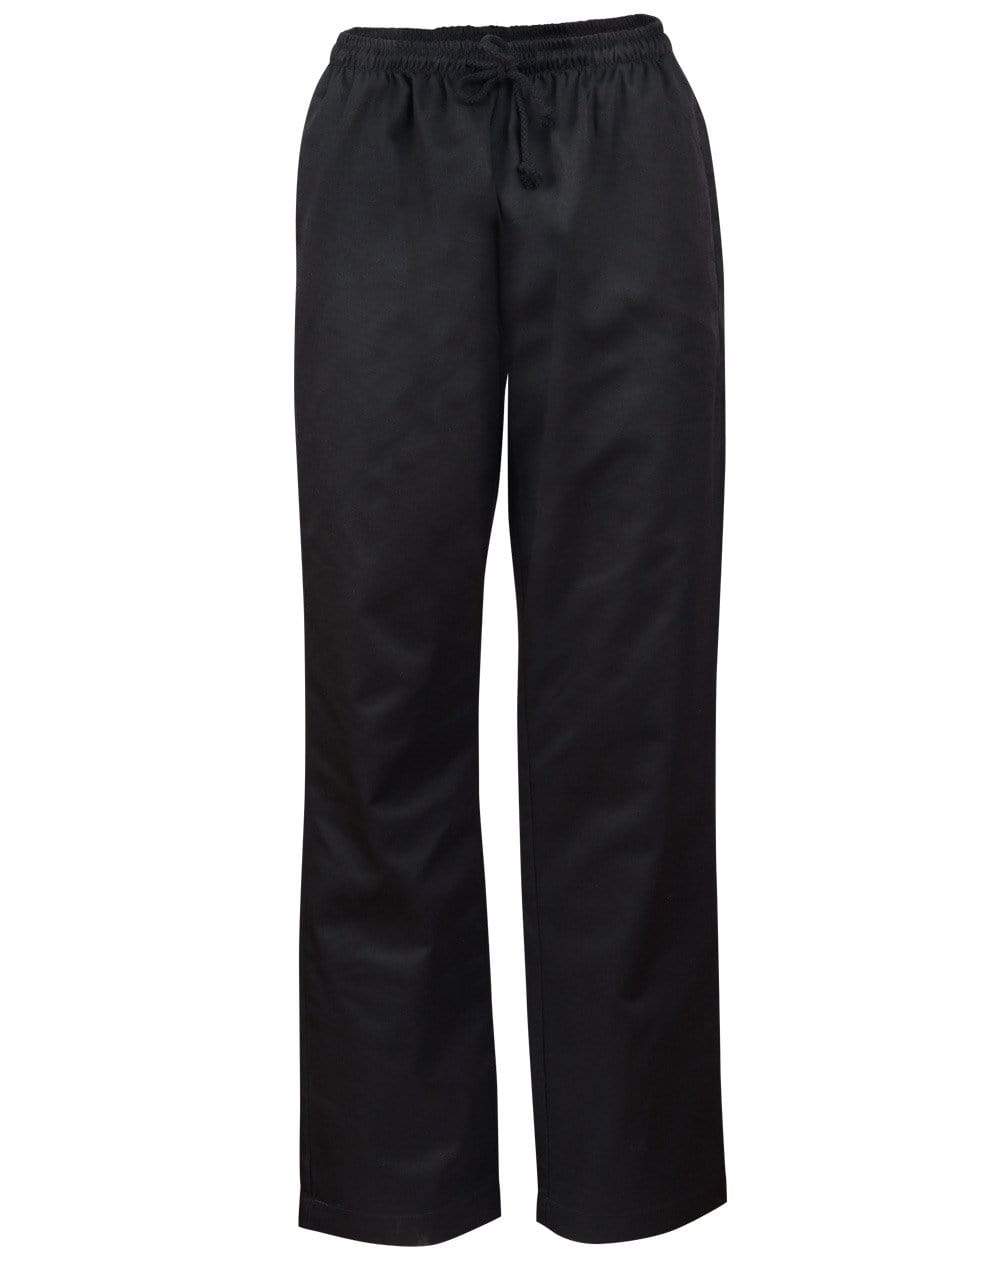 Chef's Pants CP01 Hospitality & Chefwear Australian Industrial Wear XS Black 